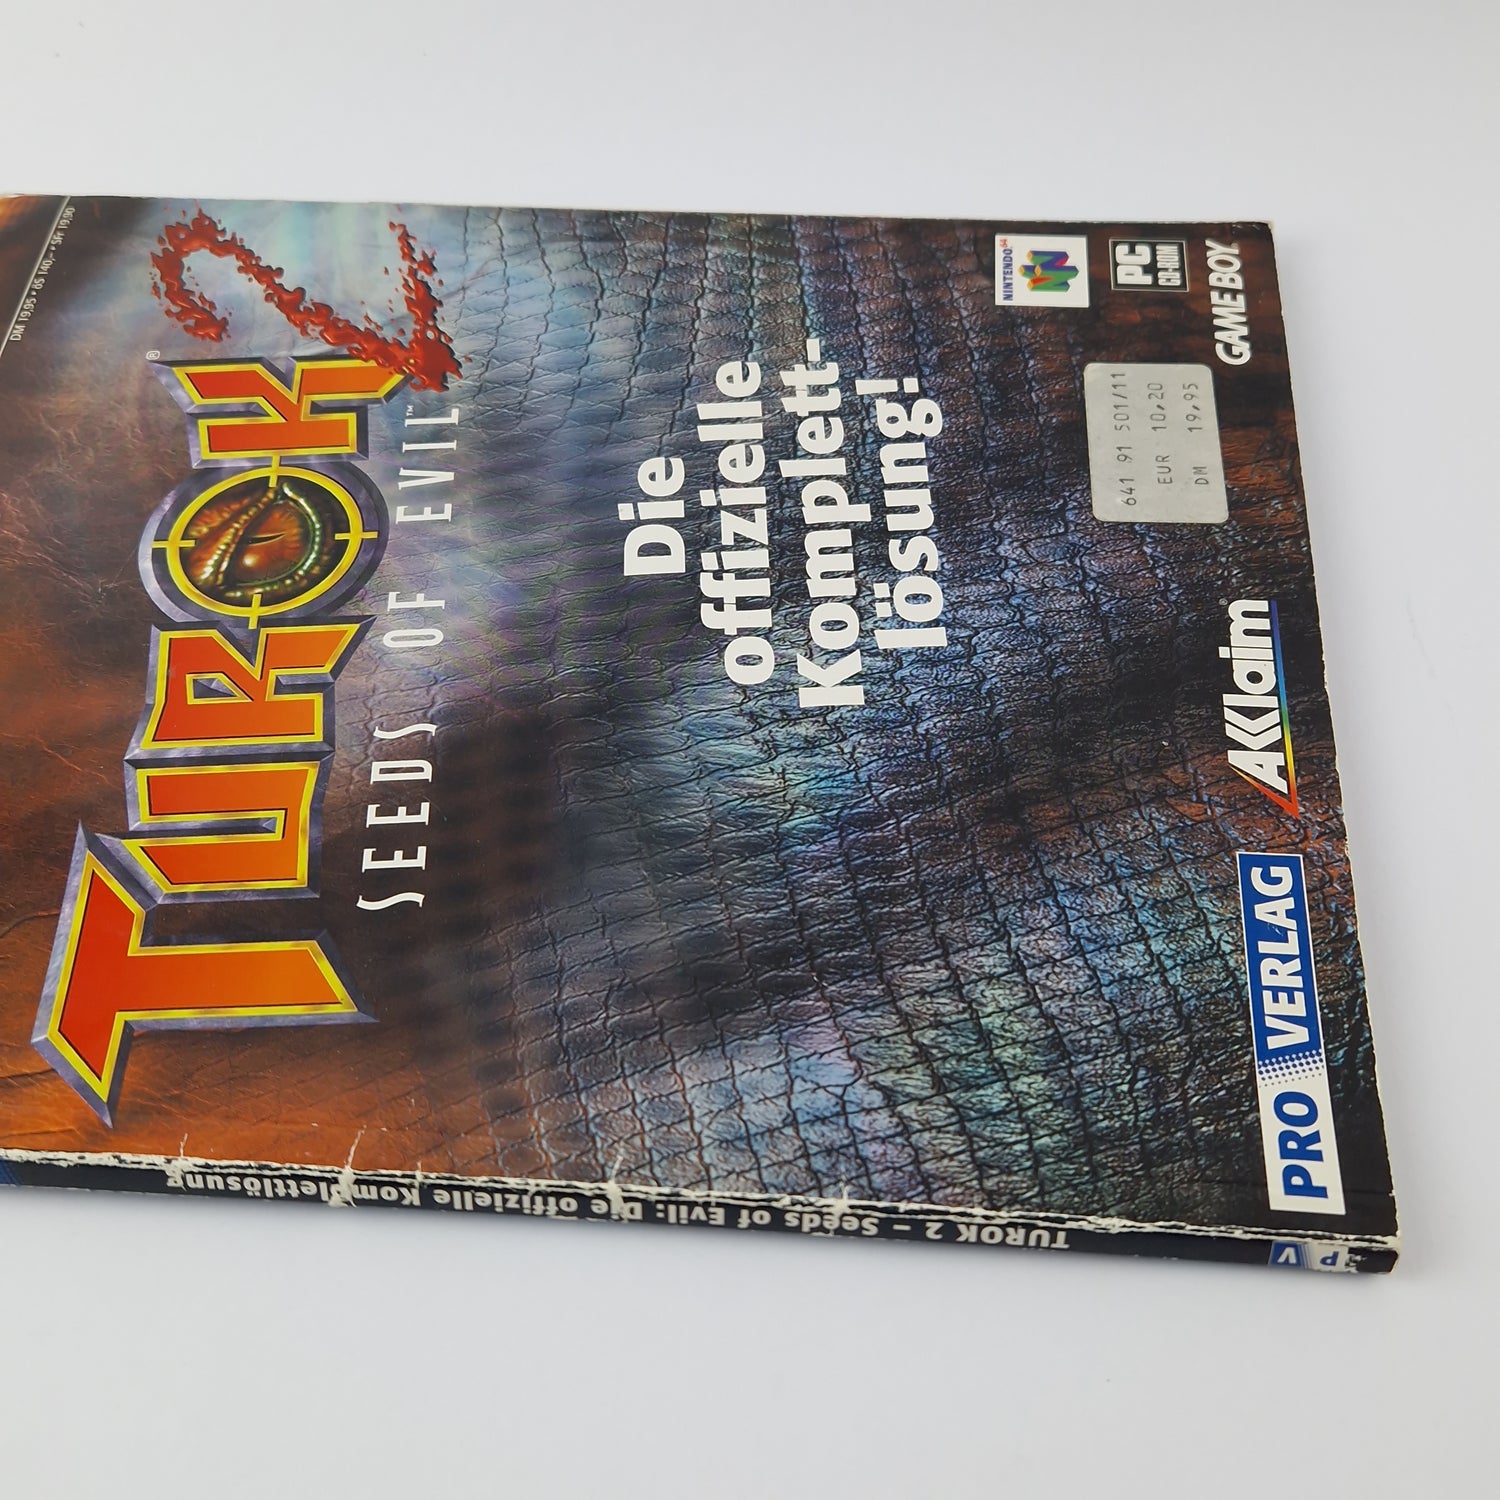 Spieleberater Nr. 1 : Turok 2 Seeds of Evil - Lösungsbuch N64 Gameboy PC